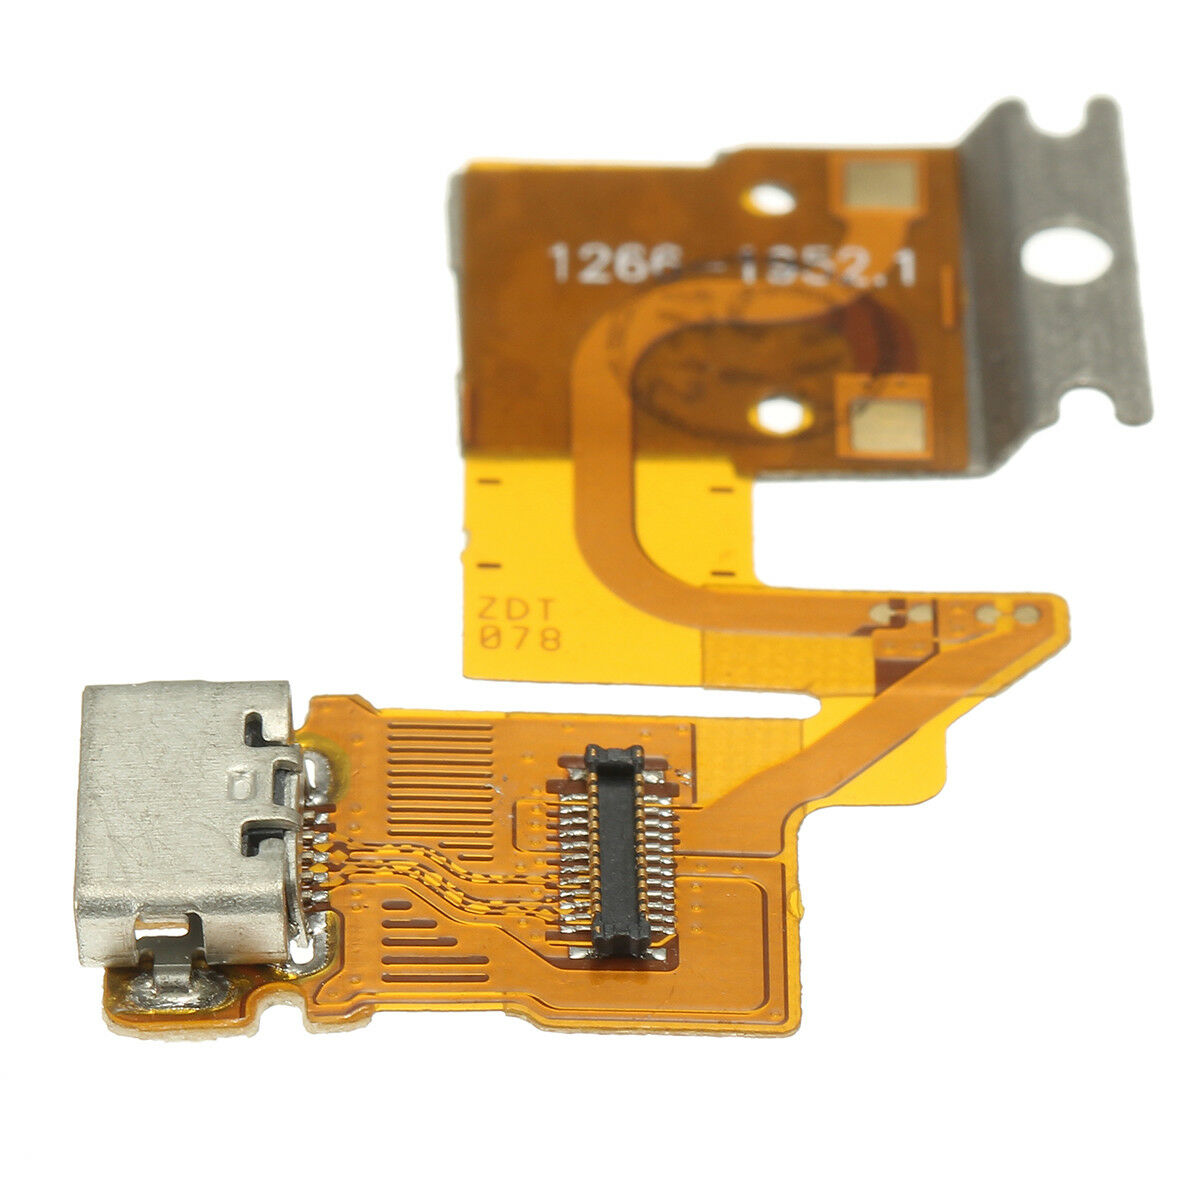 USB Charging Dock Port Flex Cable For Sony Xperia Tablet Z SGP311 SGP312 SGP321